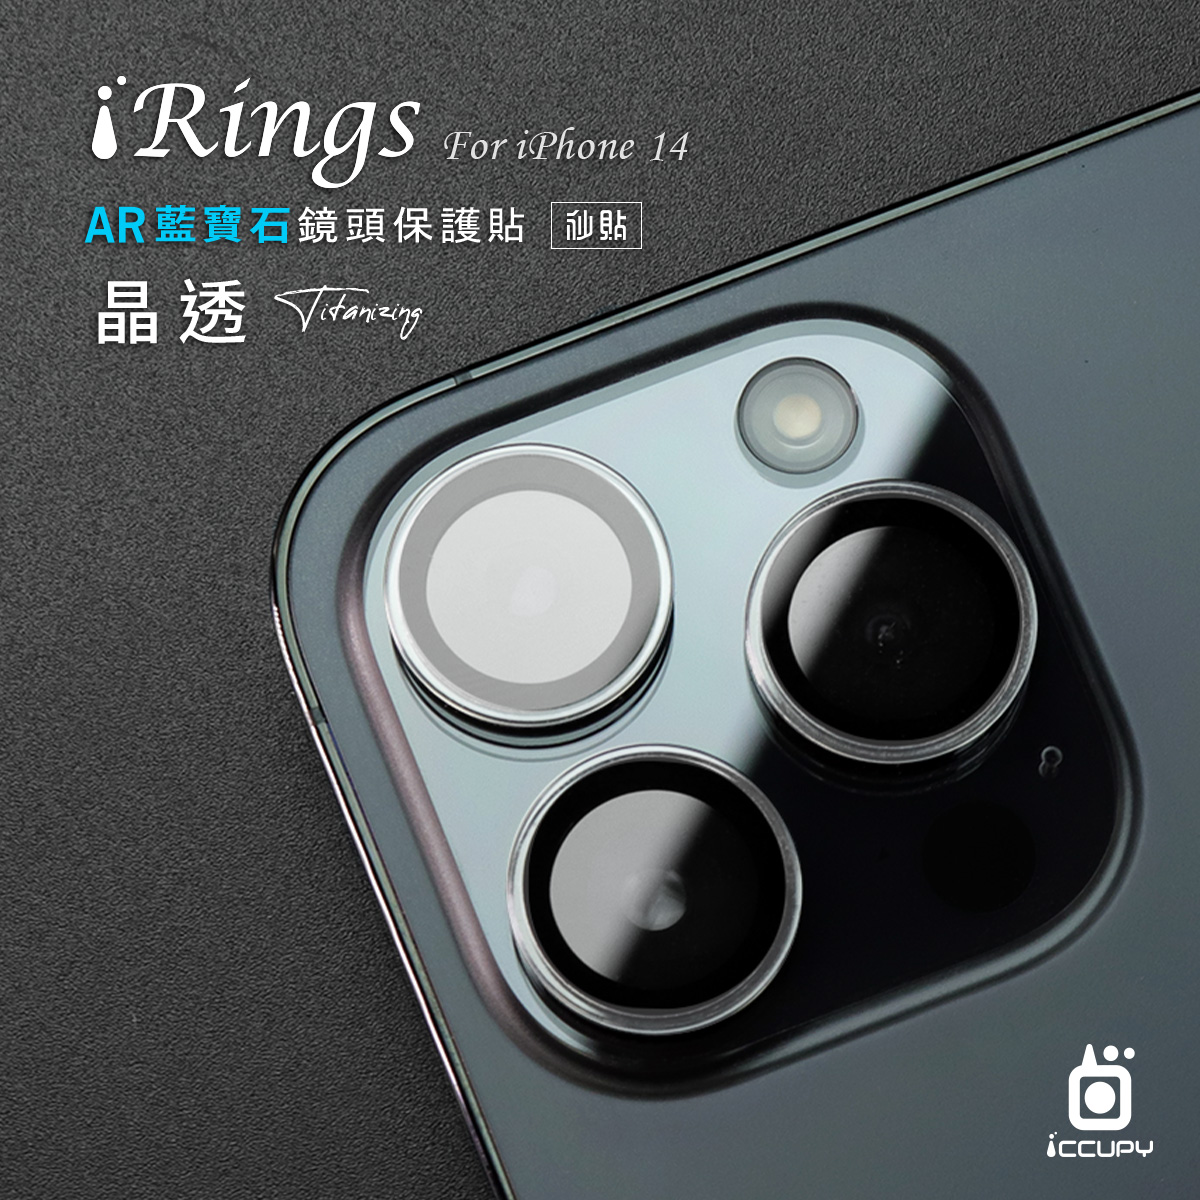 iRings AR藍寶石鏡頭保護貼-晶透 FOR iPhone 14 Pro Max